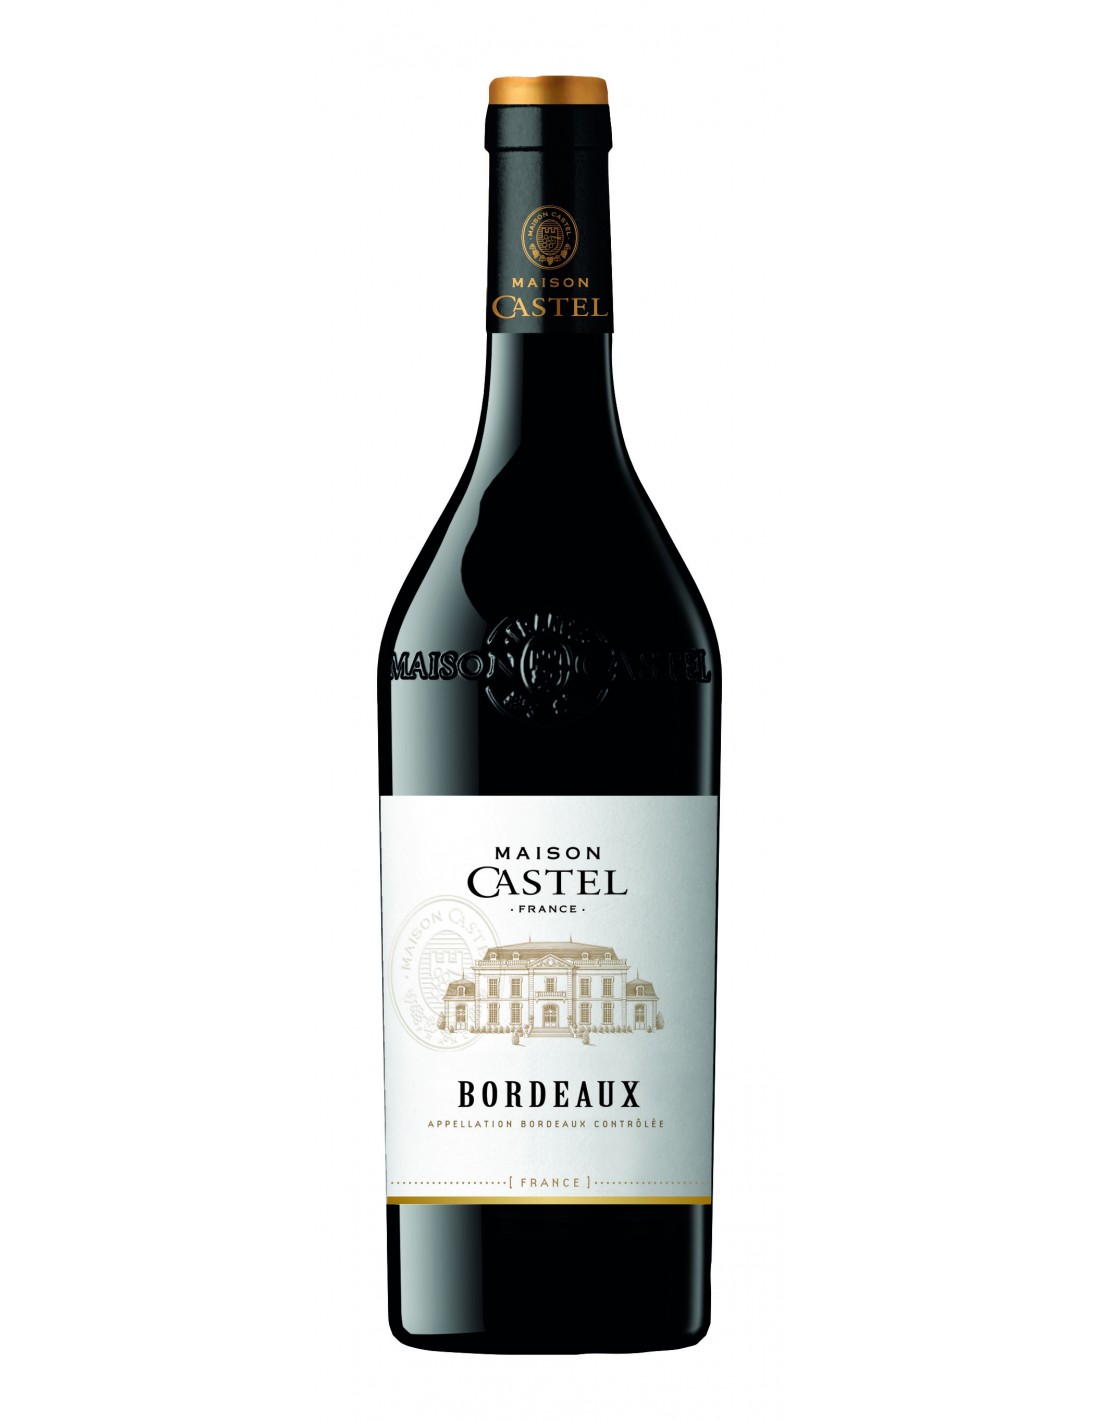 Vin rosu sec, Merlot, Maison Castel Bordeaux, 14% alc., 0.75L, Franta alcooldiscount.ro